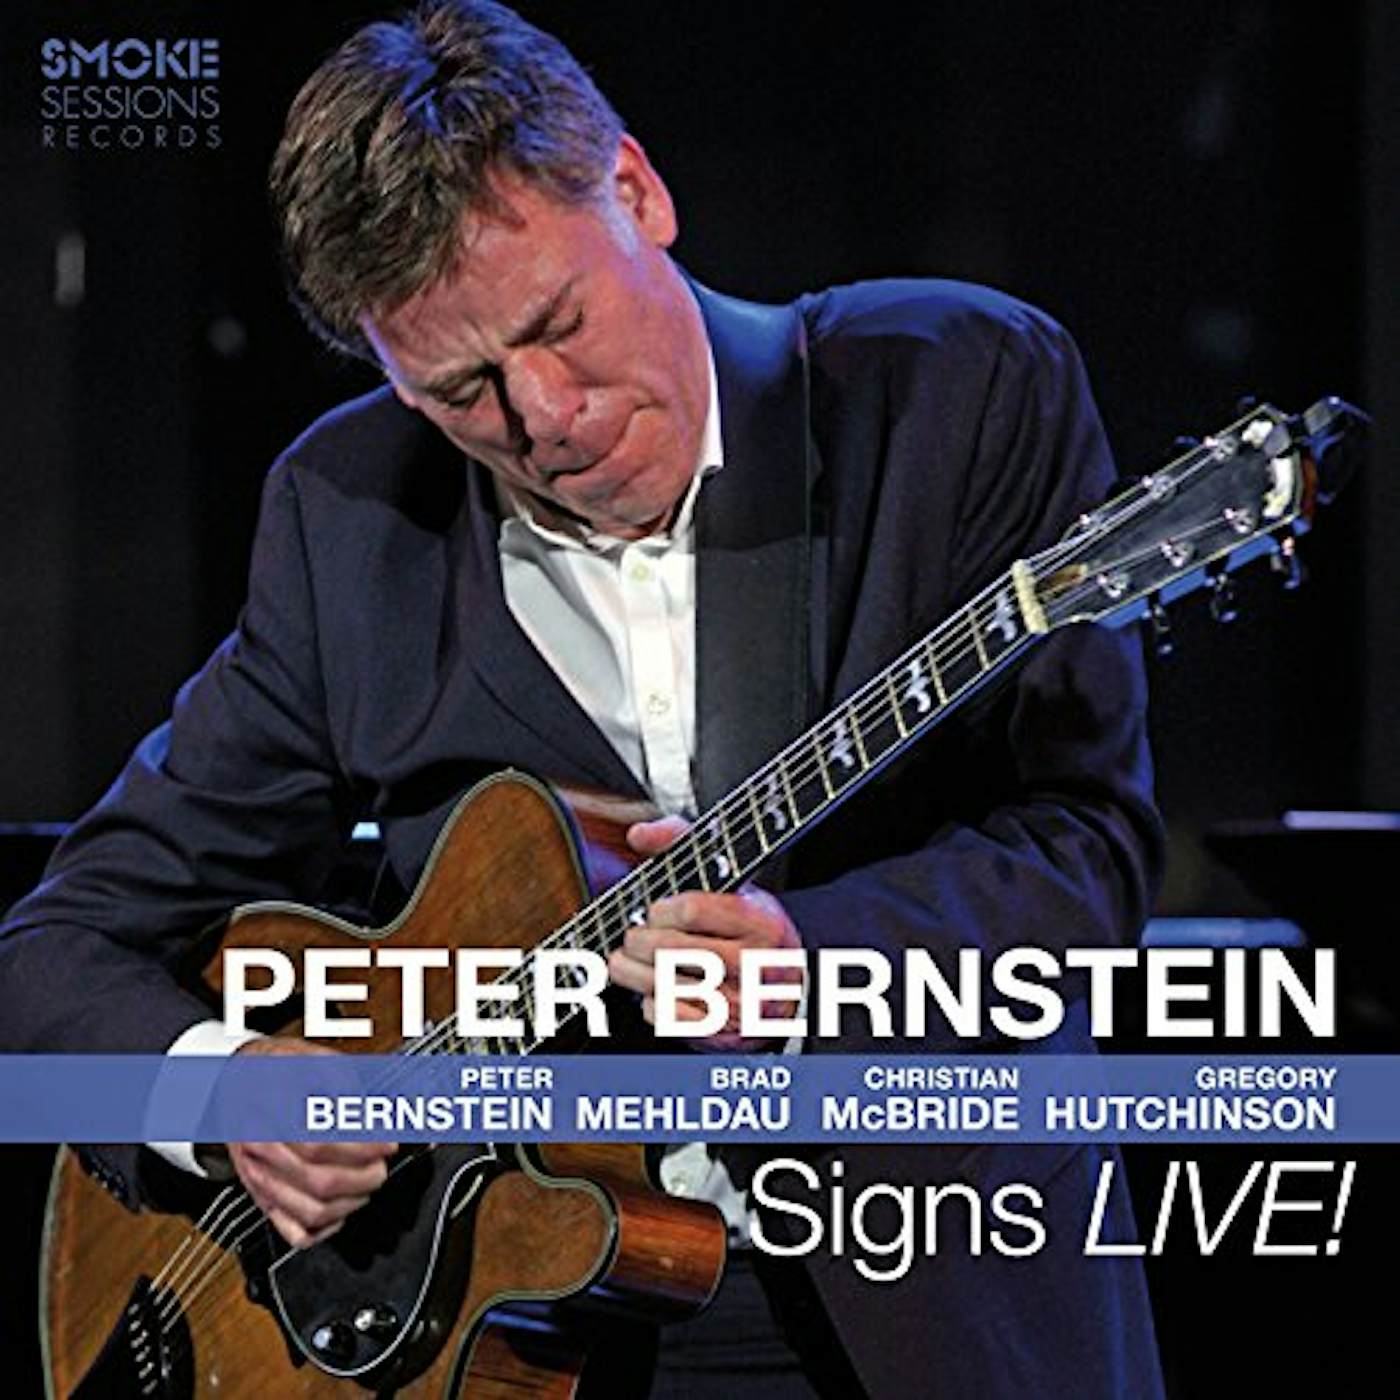 Peter Bernstein SIGNS LIVE CD